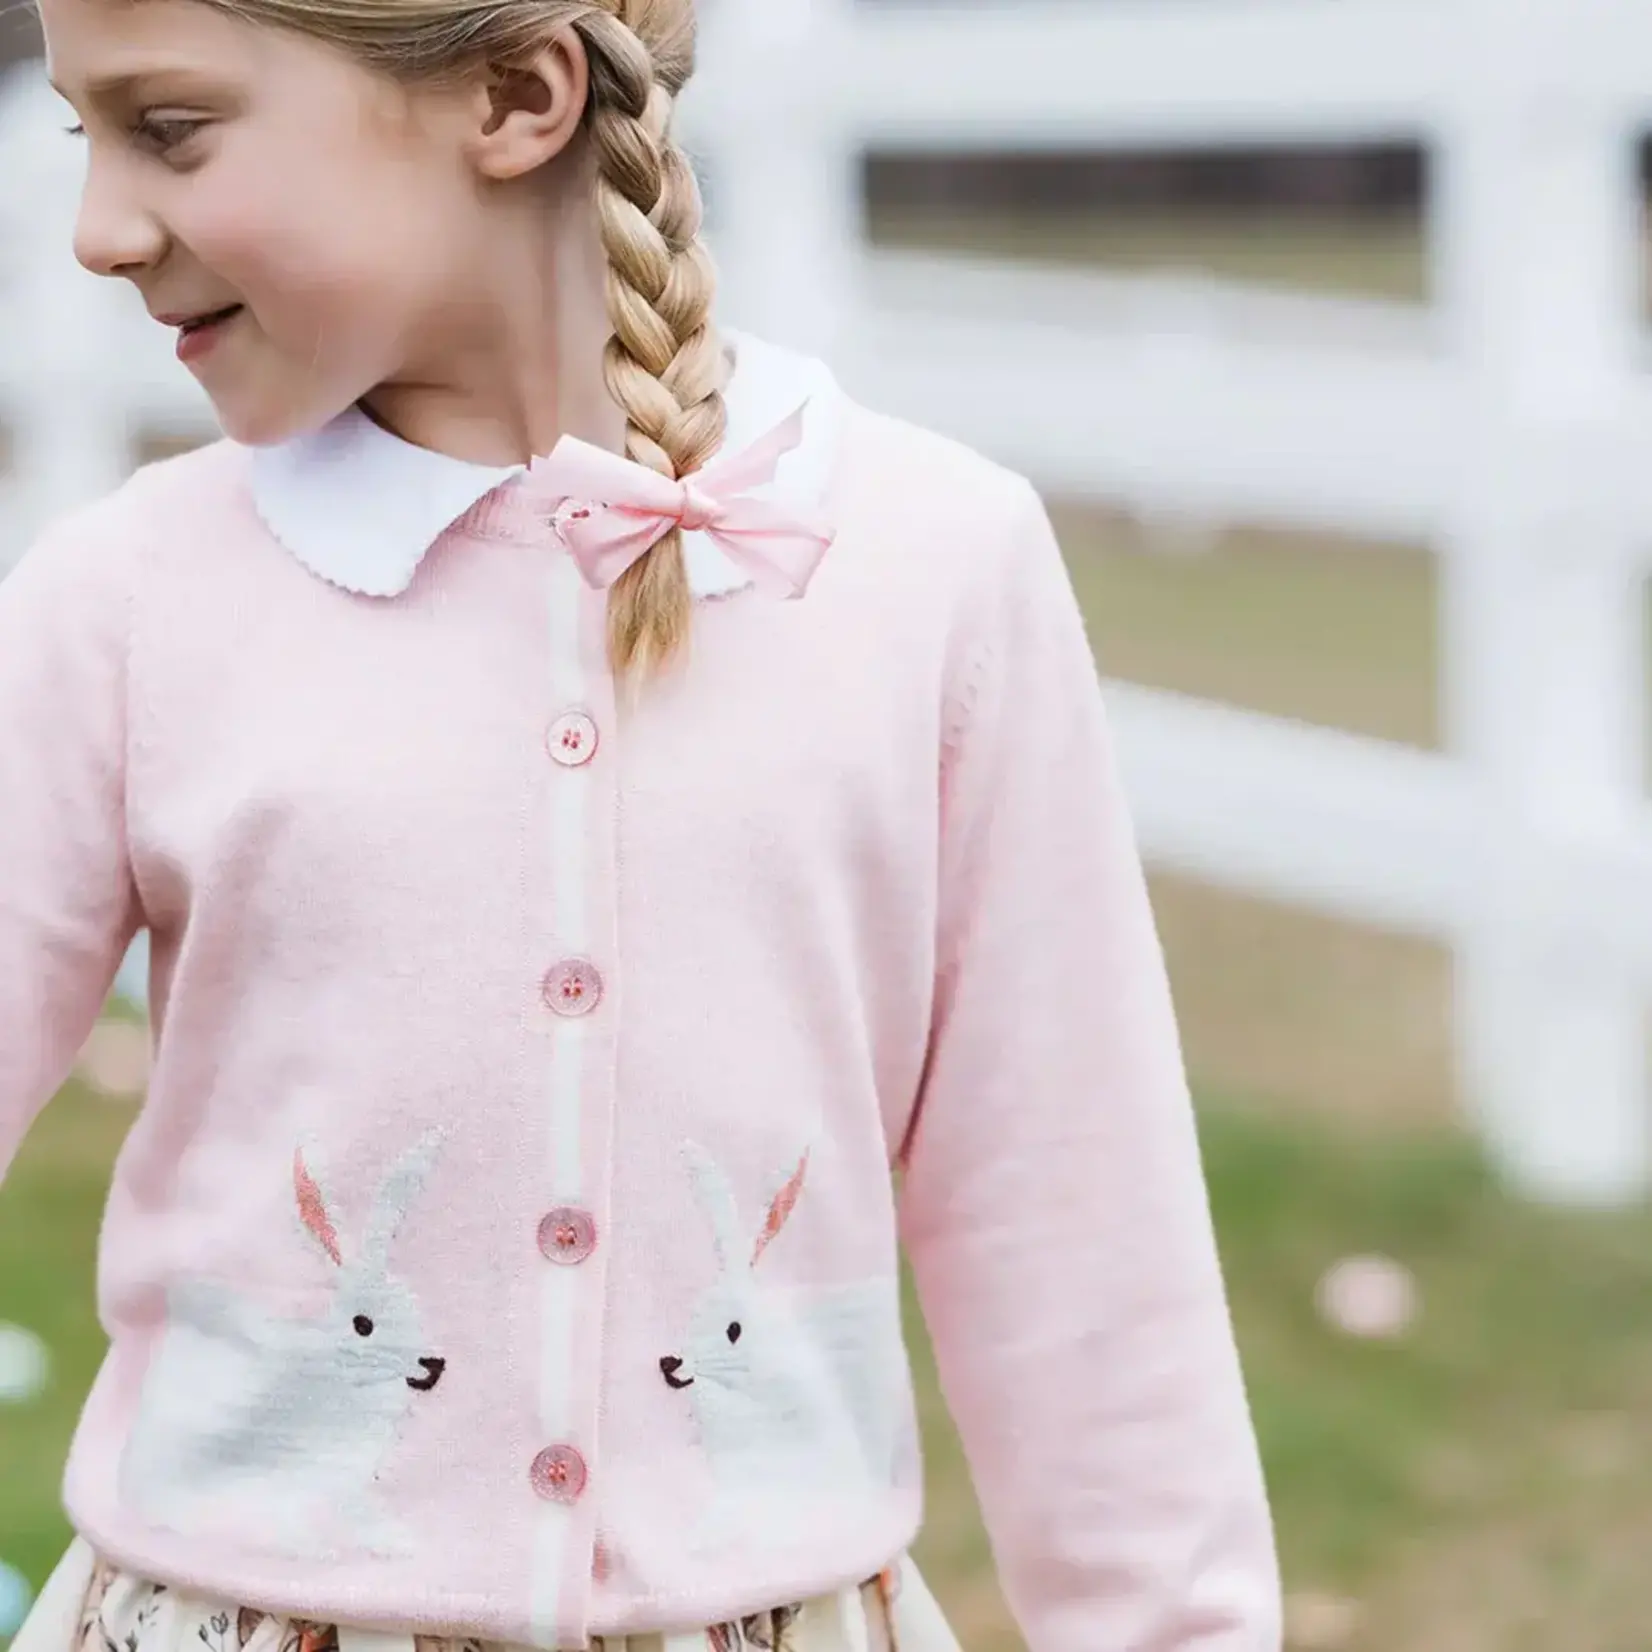 Pink Chicken Baby Girls Maude Rabbit Sweater - Light Pink